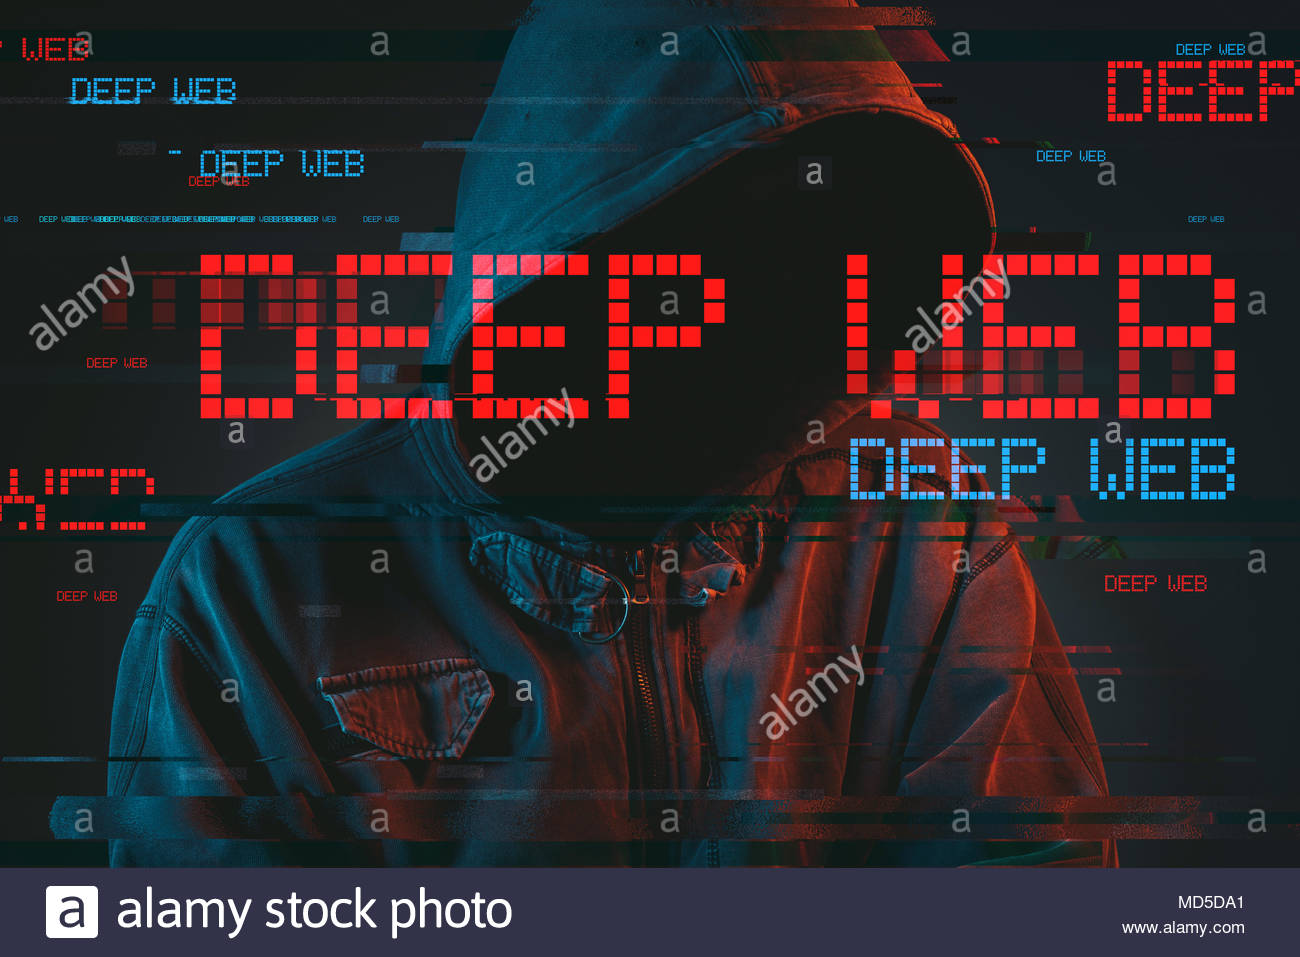 deep web wallpaper